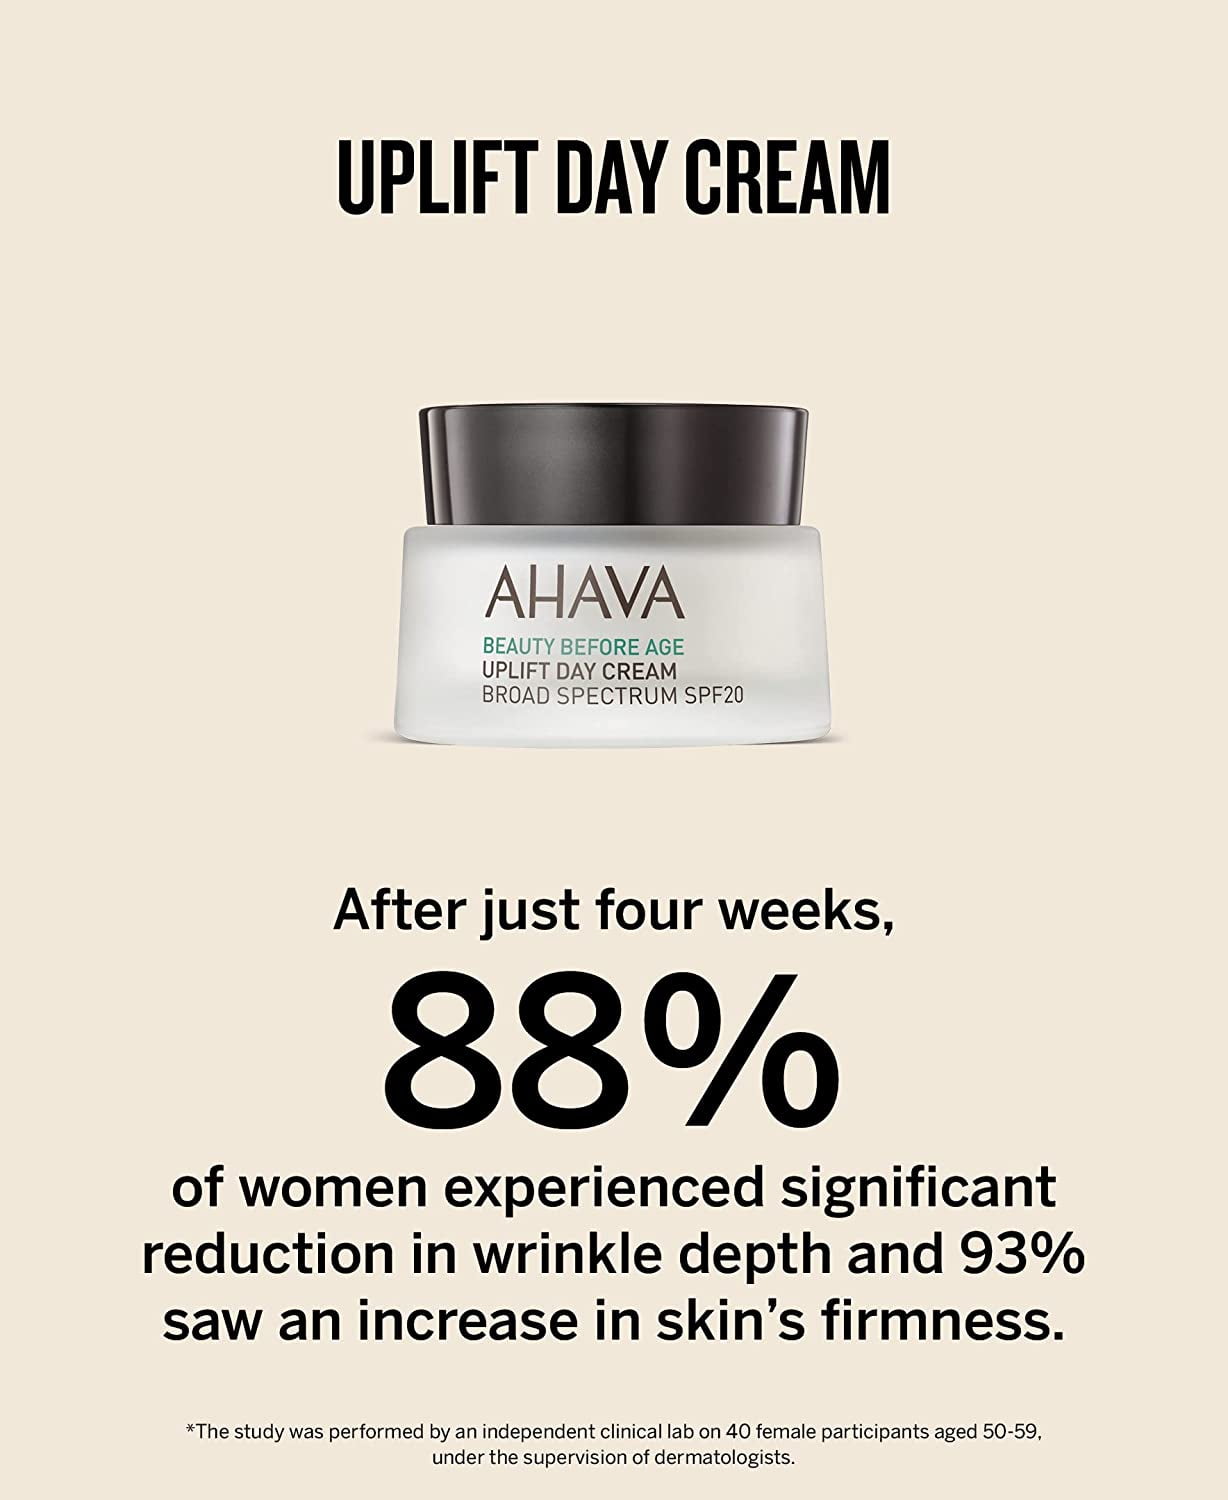 1.7 - Broad Spectrum Age Cream Beauty Day oz. SPF20 AHAVA Before Uplift